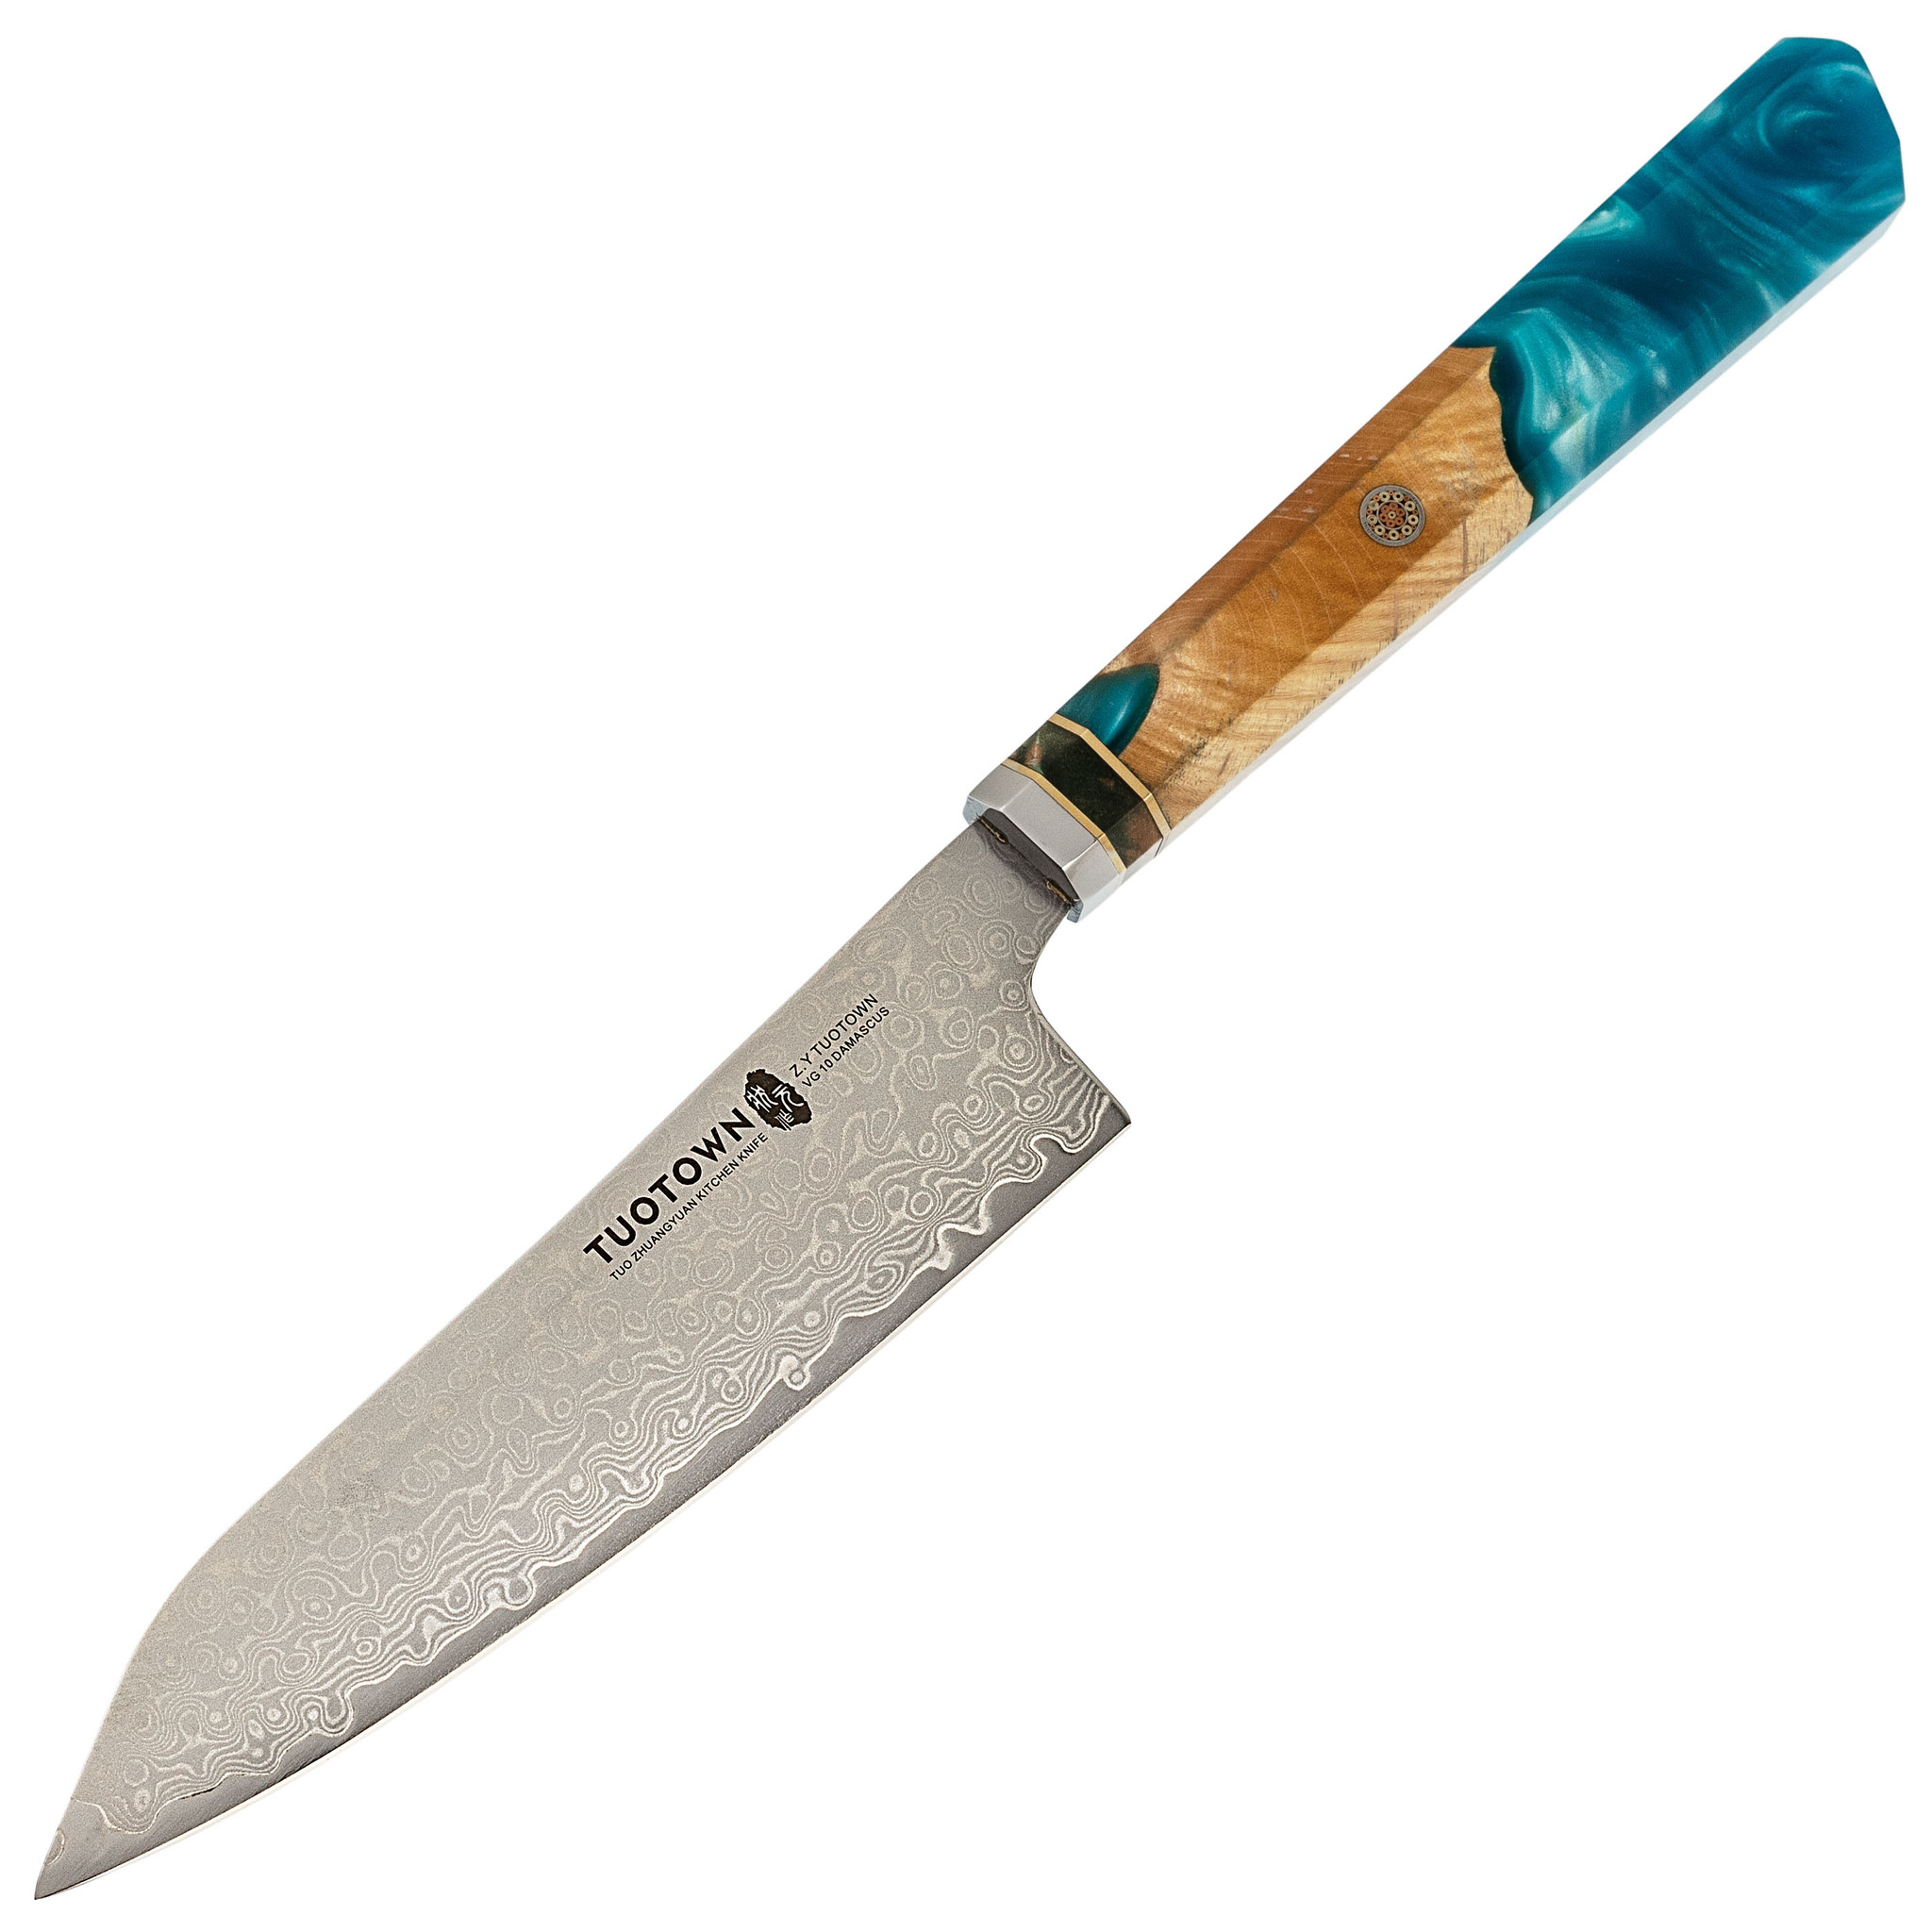 Кухонный нож Tuotown, сталь VG10, рукоять дерево/эпоксидка - фото 1